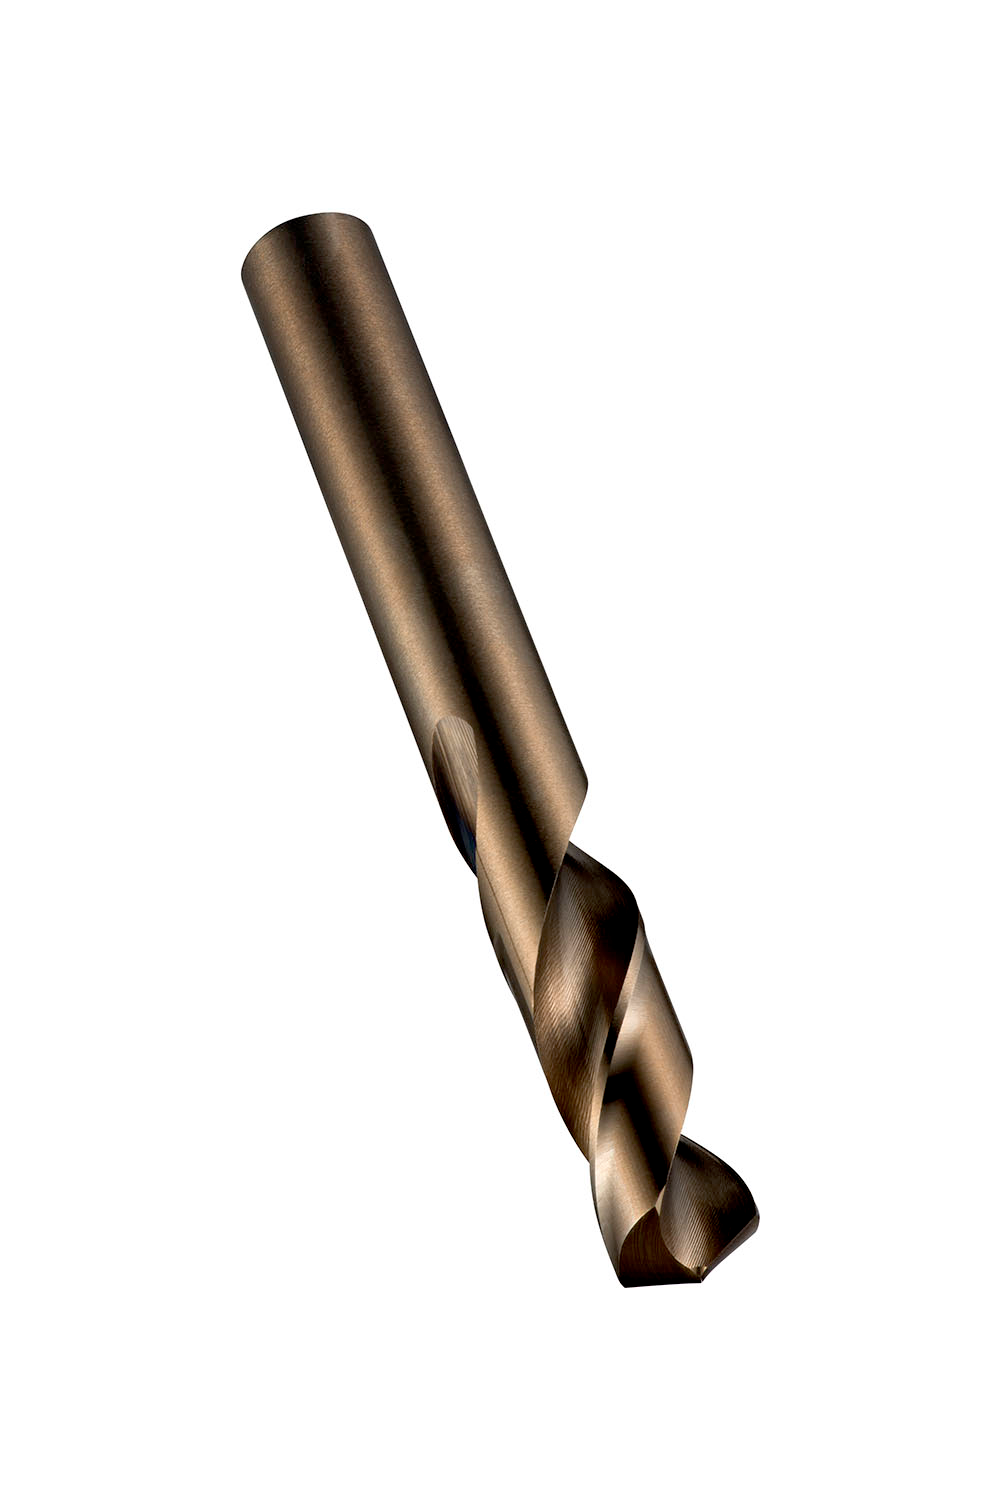 Stub length drill with straight shank diameter 10.4mm